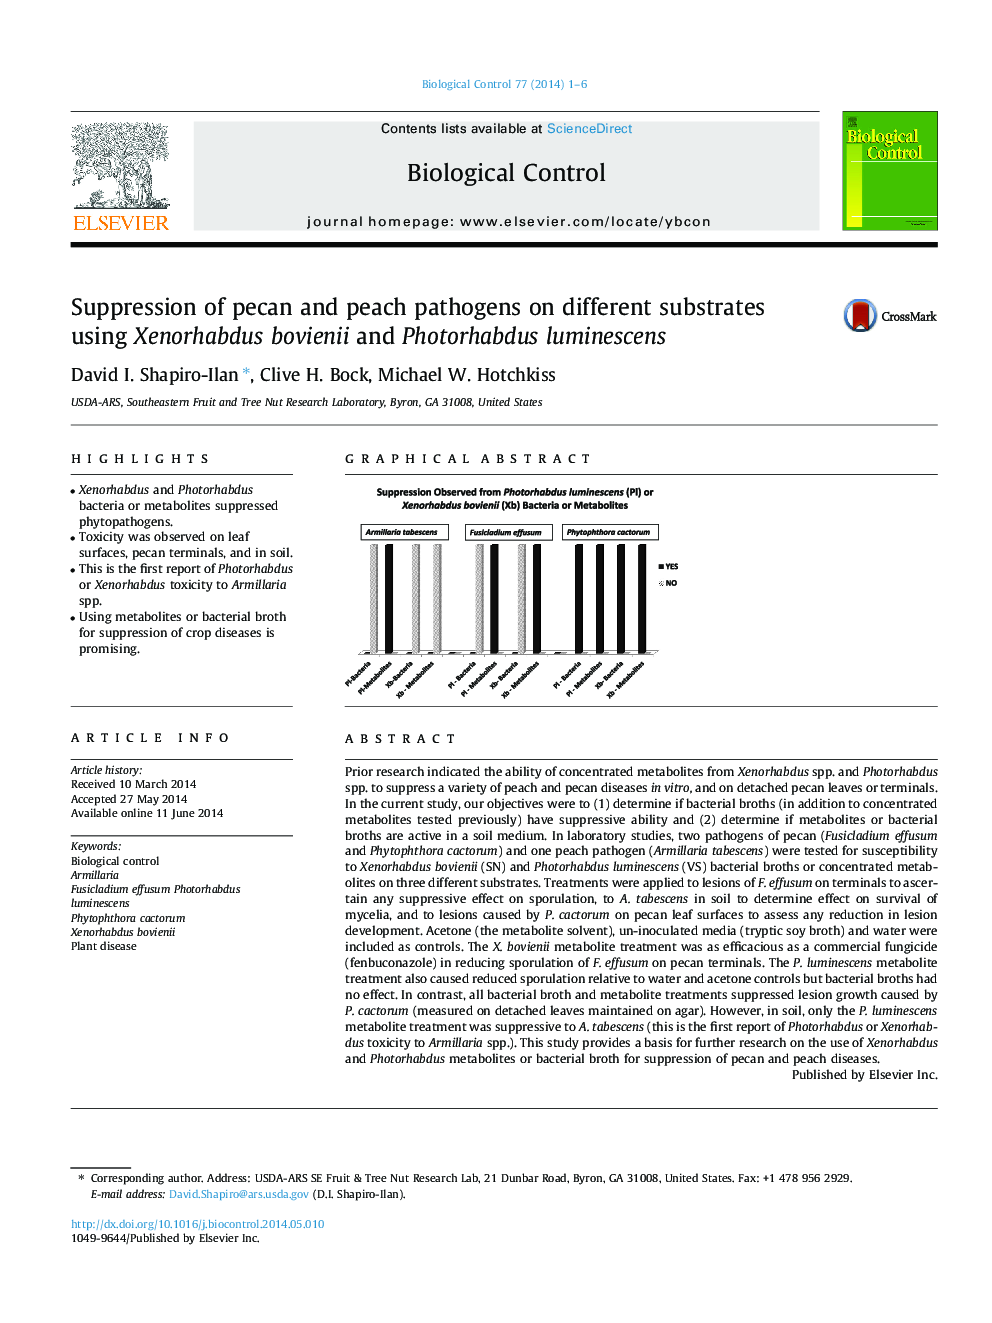 Suppression of pecan and peach pathogens on different substrates using Xenorhabdus bovienii and Photorhabdus luminescens